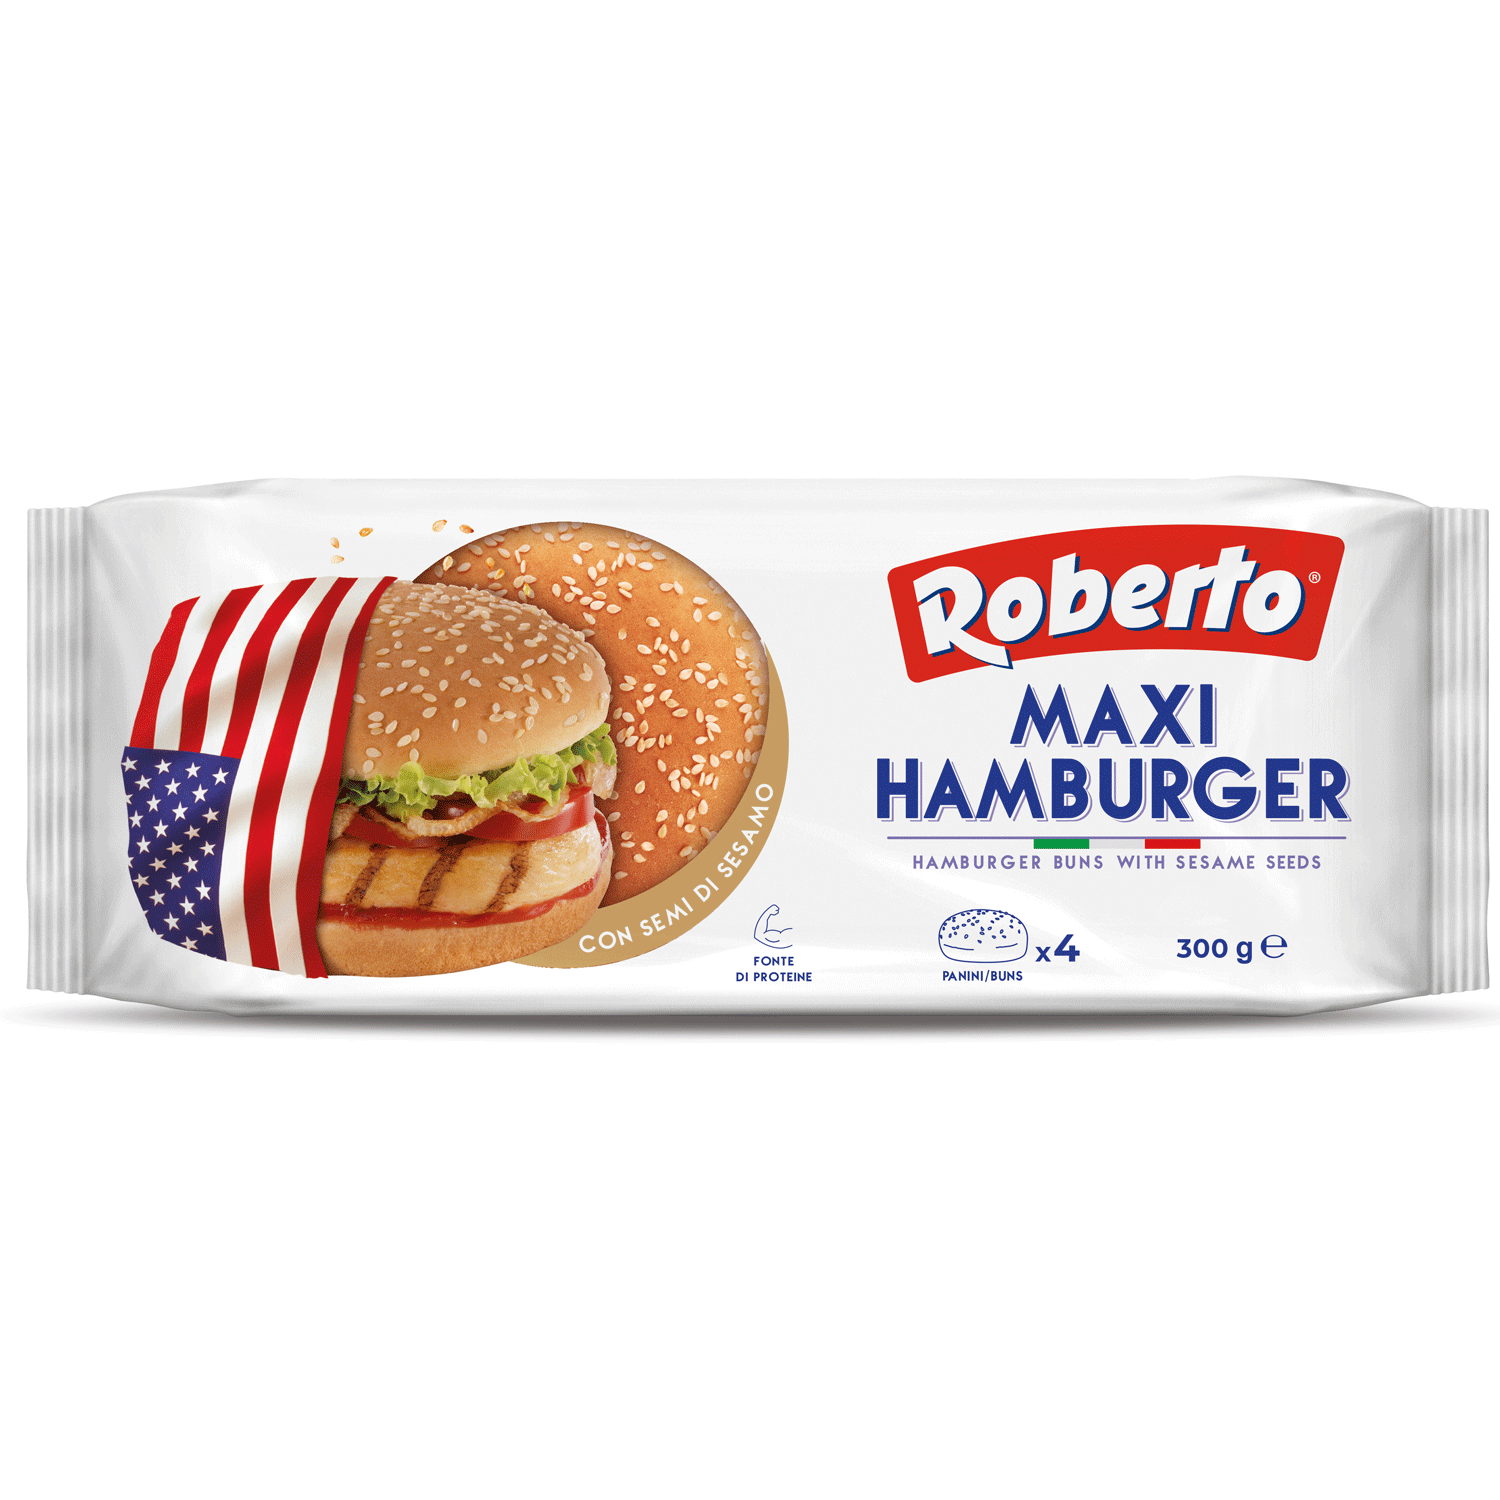 roberto-maxi-burger